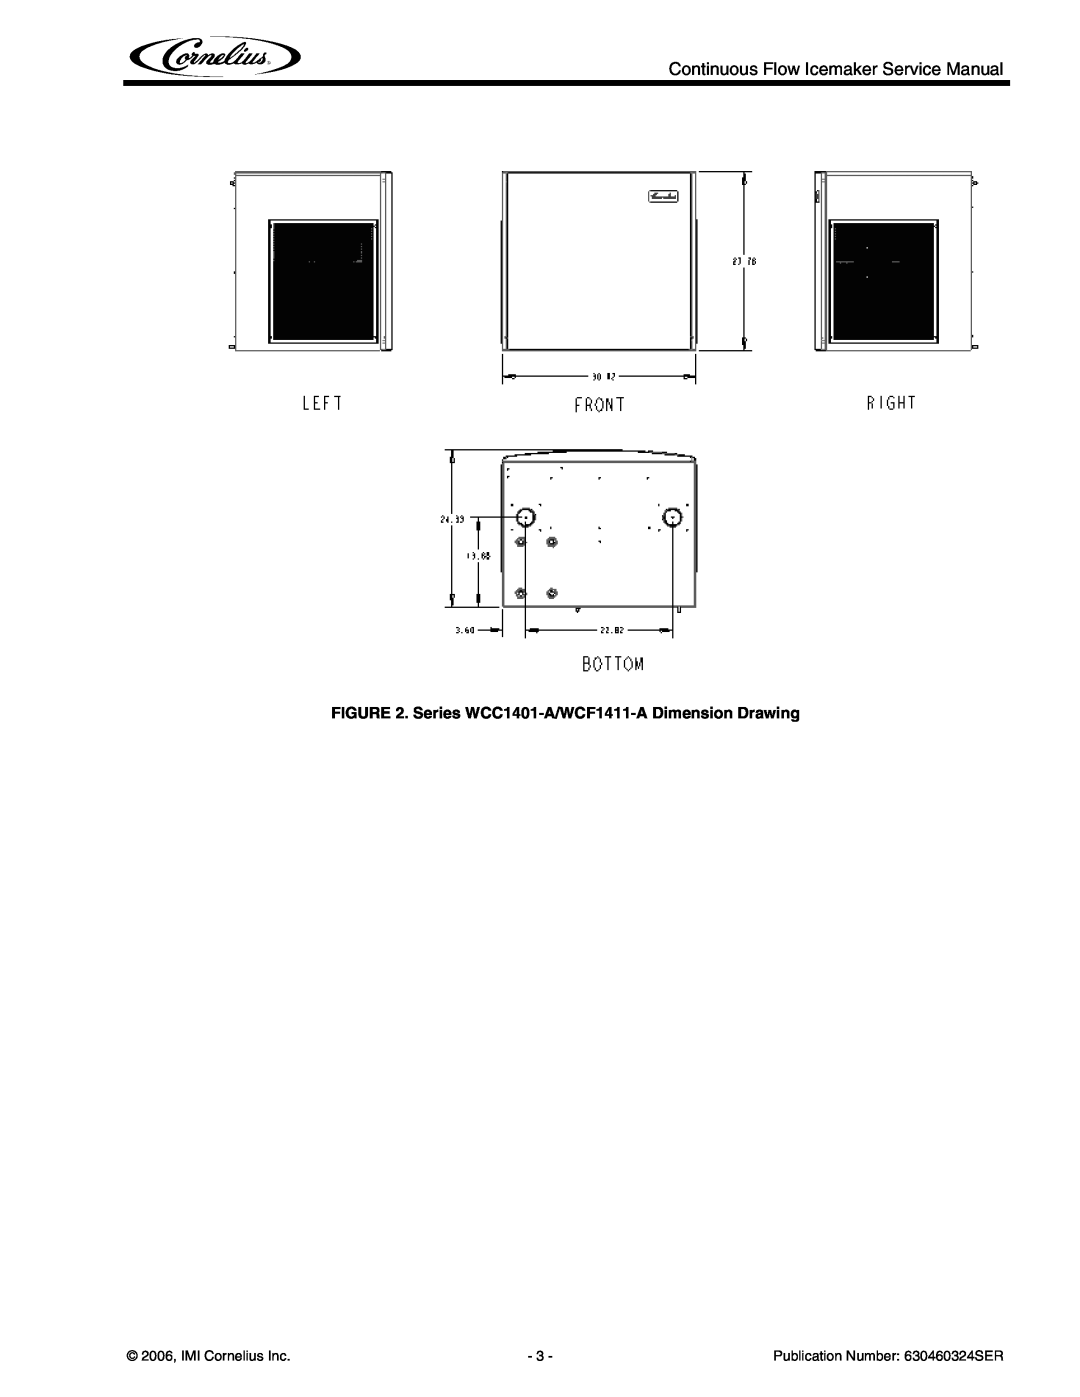 Cornelius Series WCC1401-A/WCF1411-A Dimension Drawing, 2006, IMI Cornelius Inc, Publication Number 630460324SER 